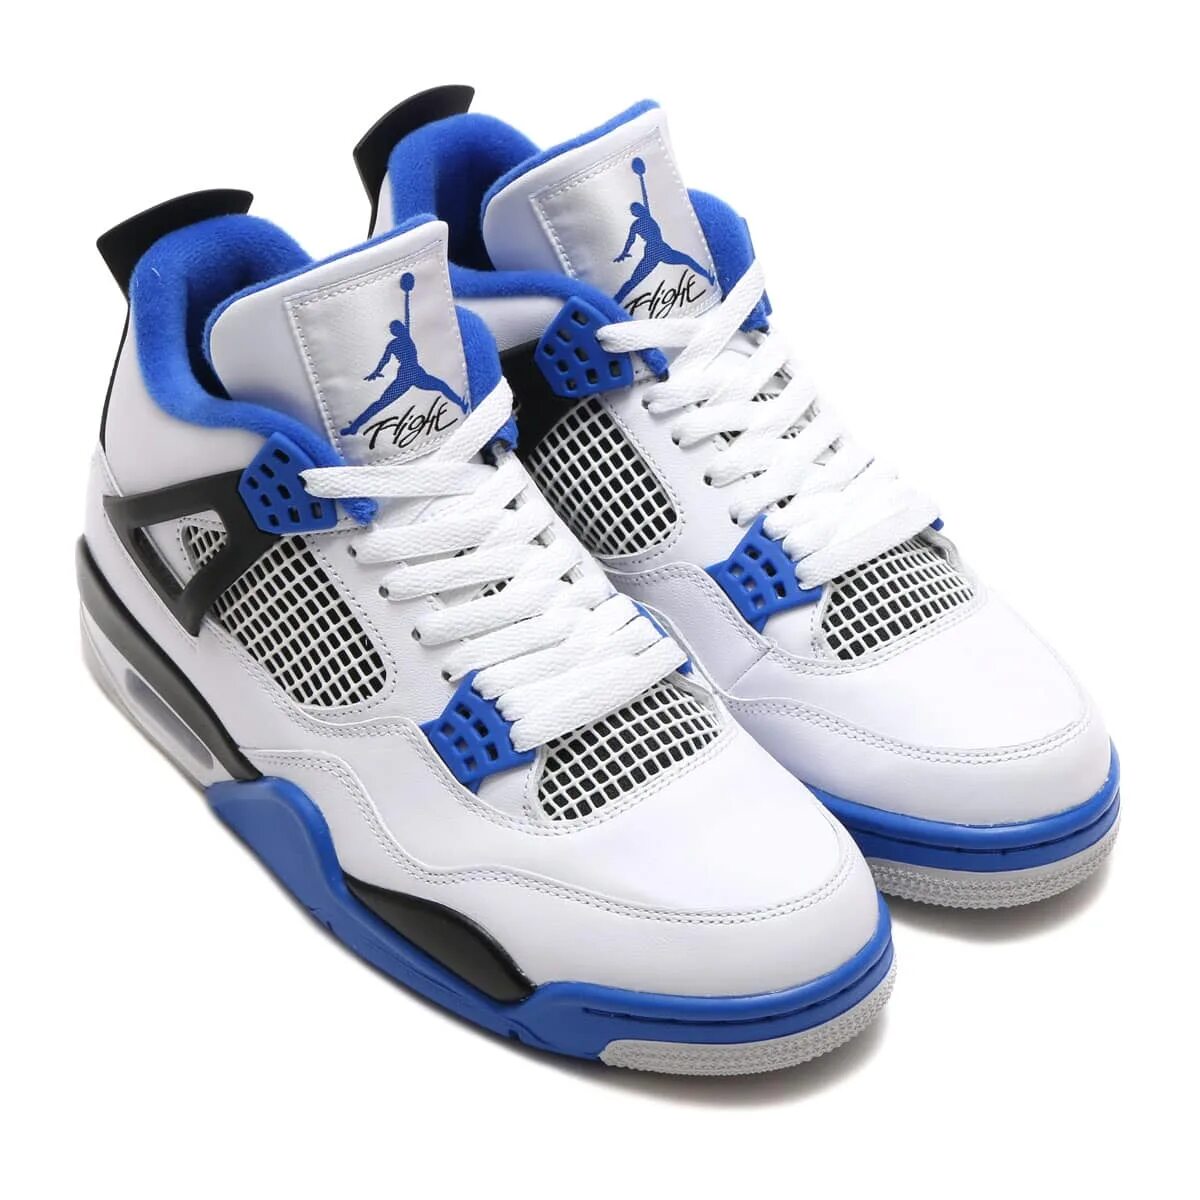 Nike Air Jordan 4 Retro Blue and White. Nike Air Jordan 4 White. Nike Air Jordan 4 Blue. Nike Air Jordan 4. Nike jordan 4 blue